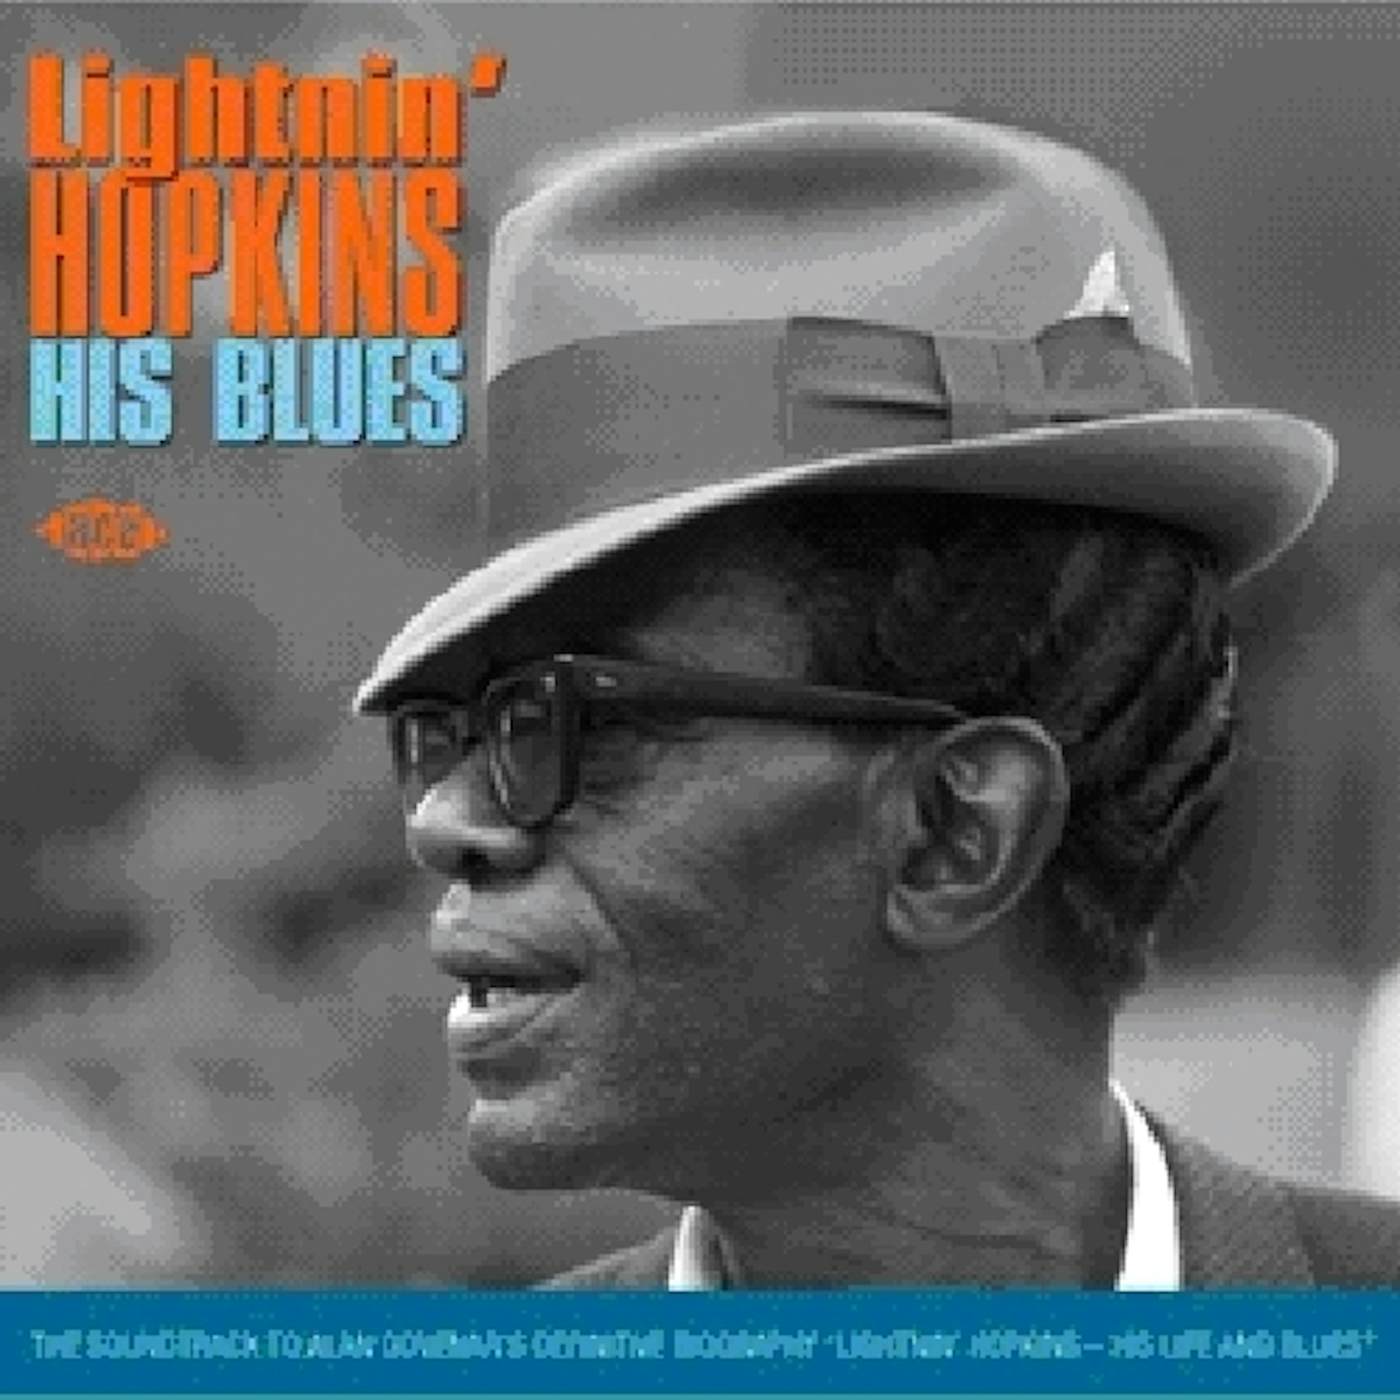 Lightnin' Hopkins HIS BLUES CD